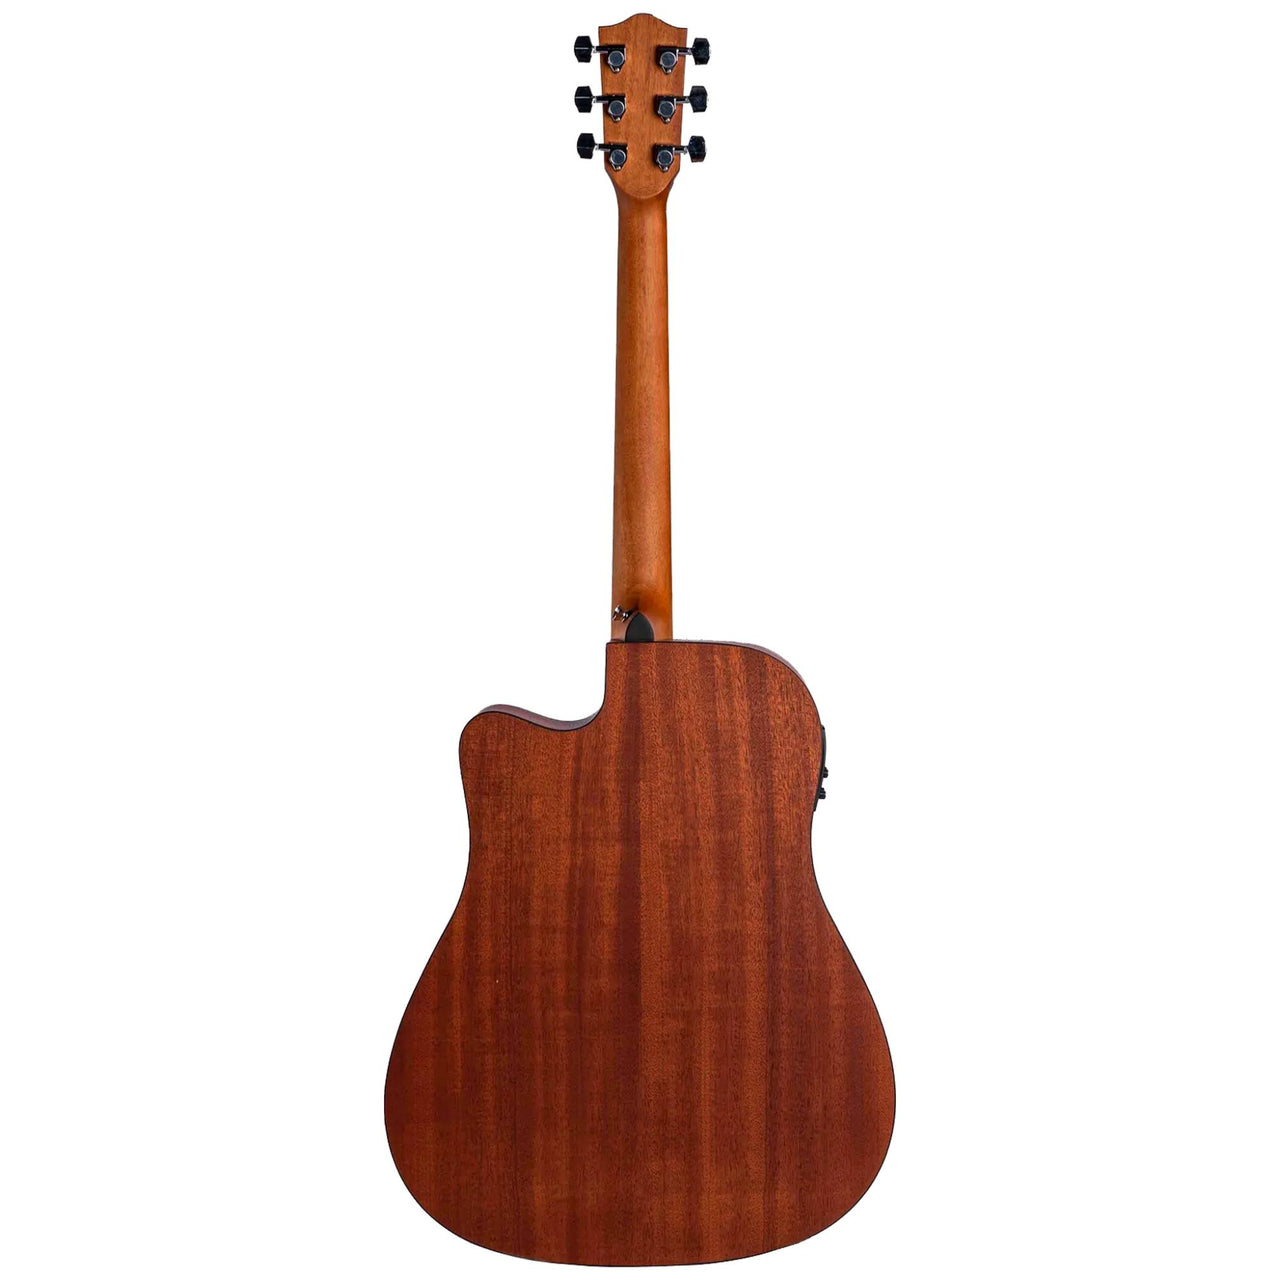 Guitarra Bamboo Ga-41-mahogany-q Electroacustica Mahogany 41 Pulgadas Con Funda